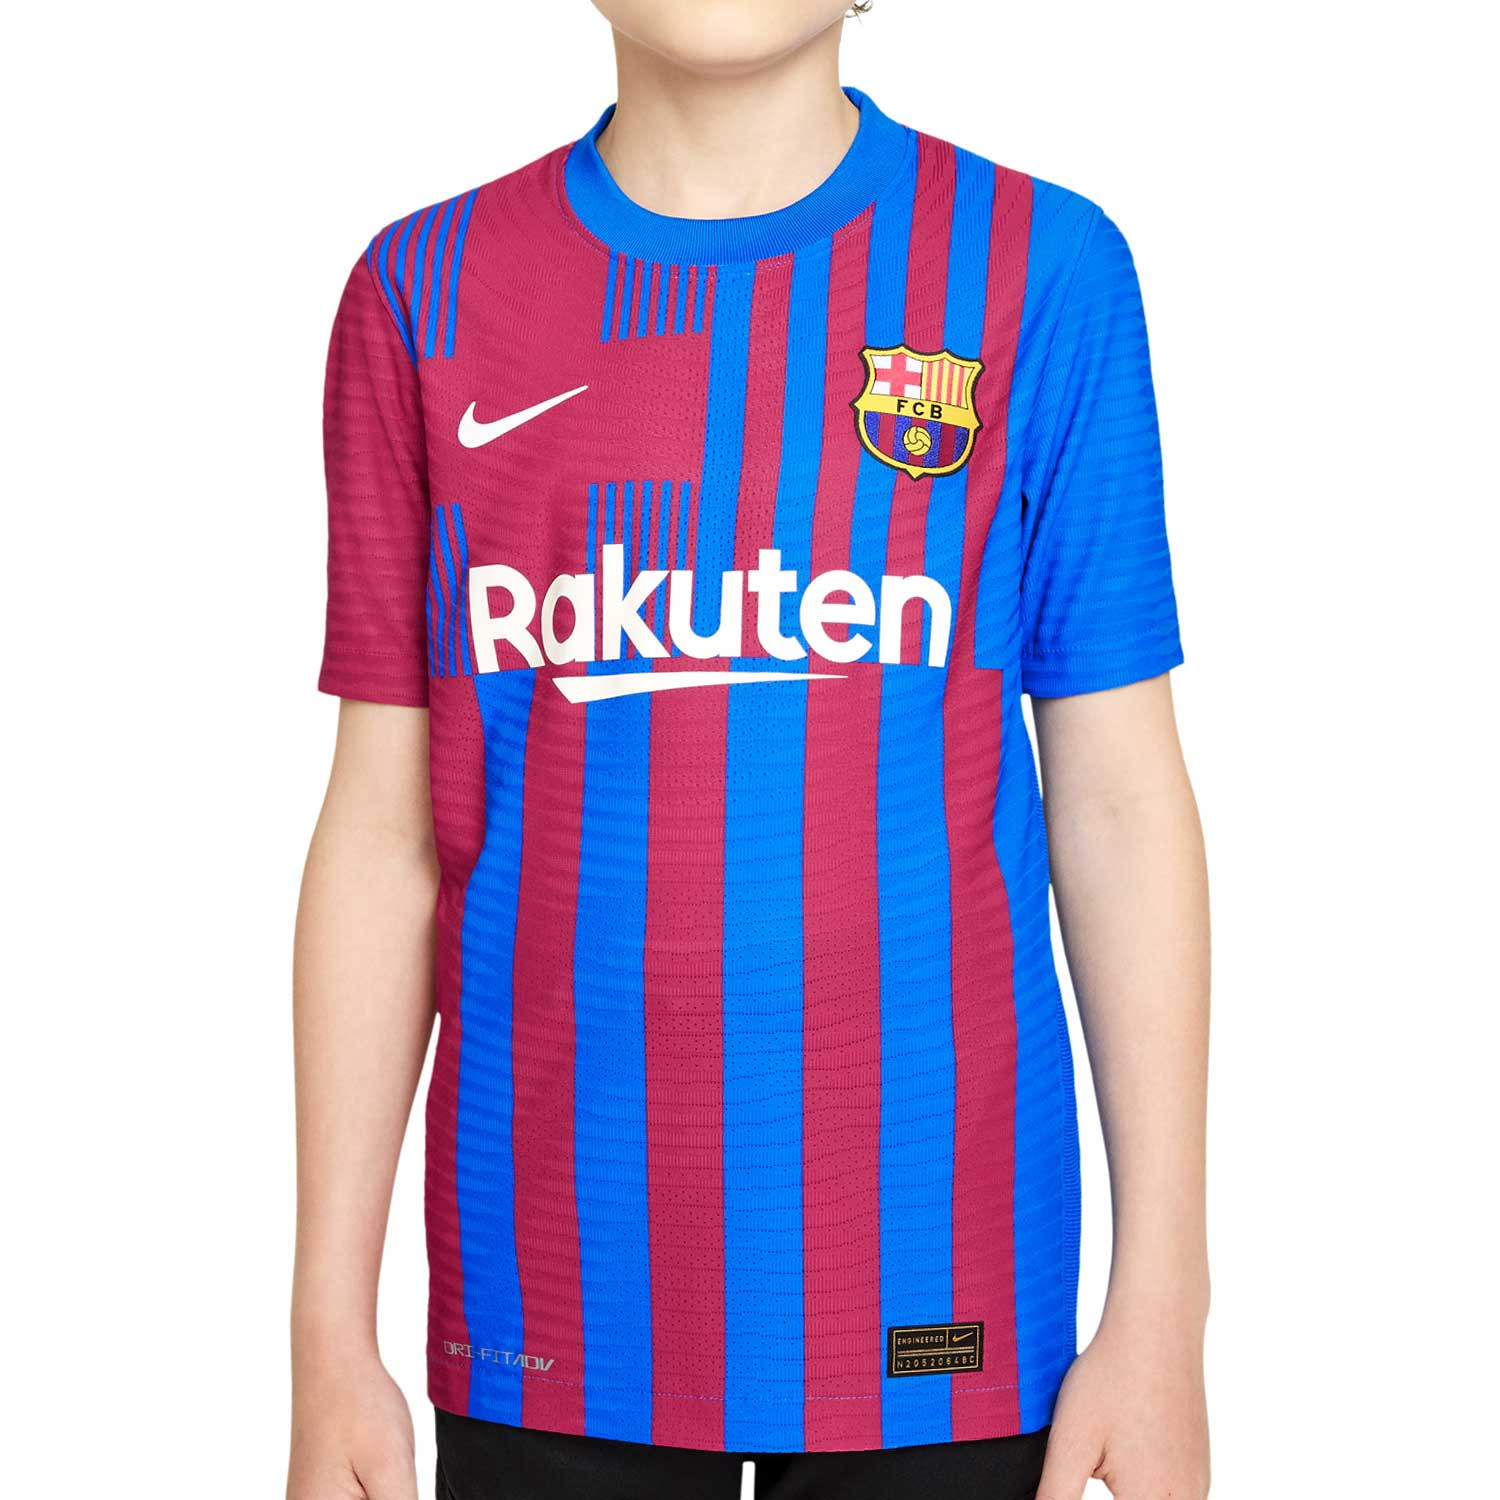 Embrión Escalofriante Género Camiseta Nike Barcelona 21 22 niño Dri-Fit ADV Match | futbolmaniaKids